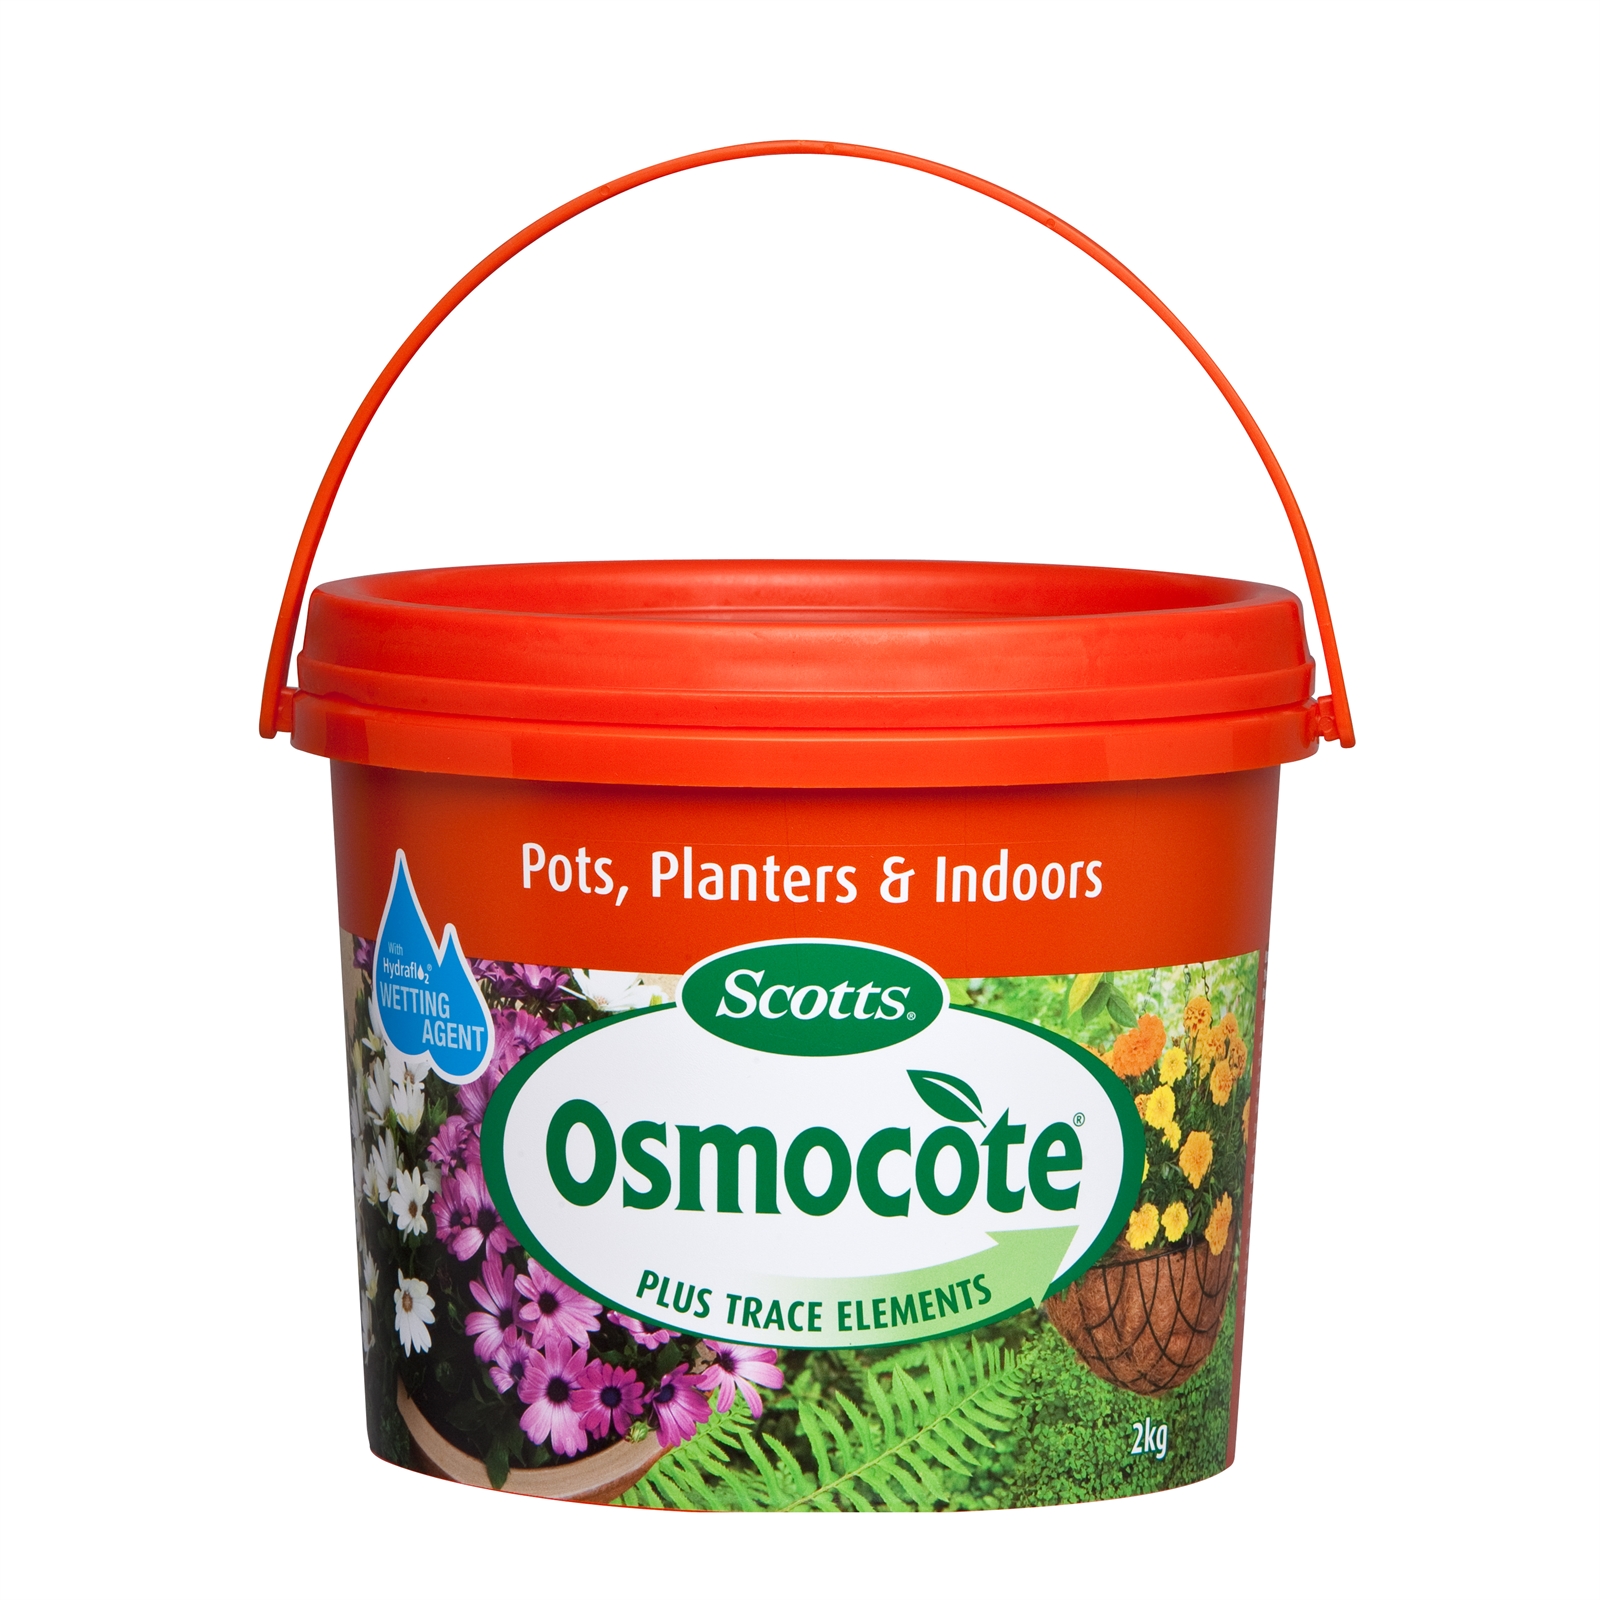 Osmocote 2kg Pots Planters and Indoors Controlled Release Fertiliser